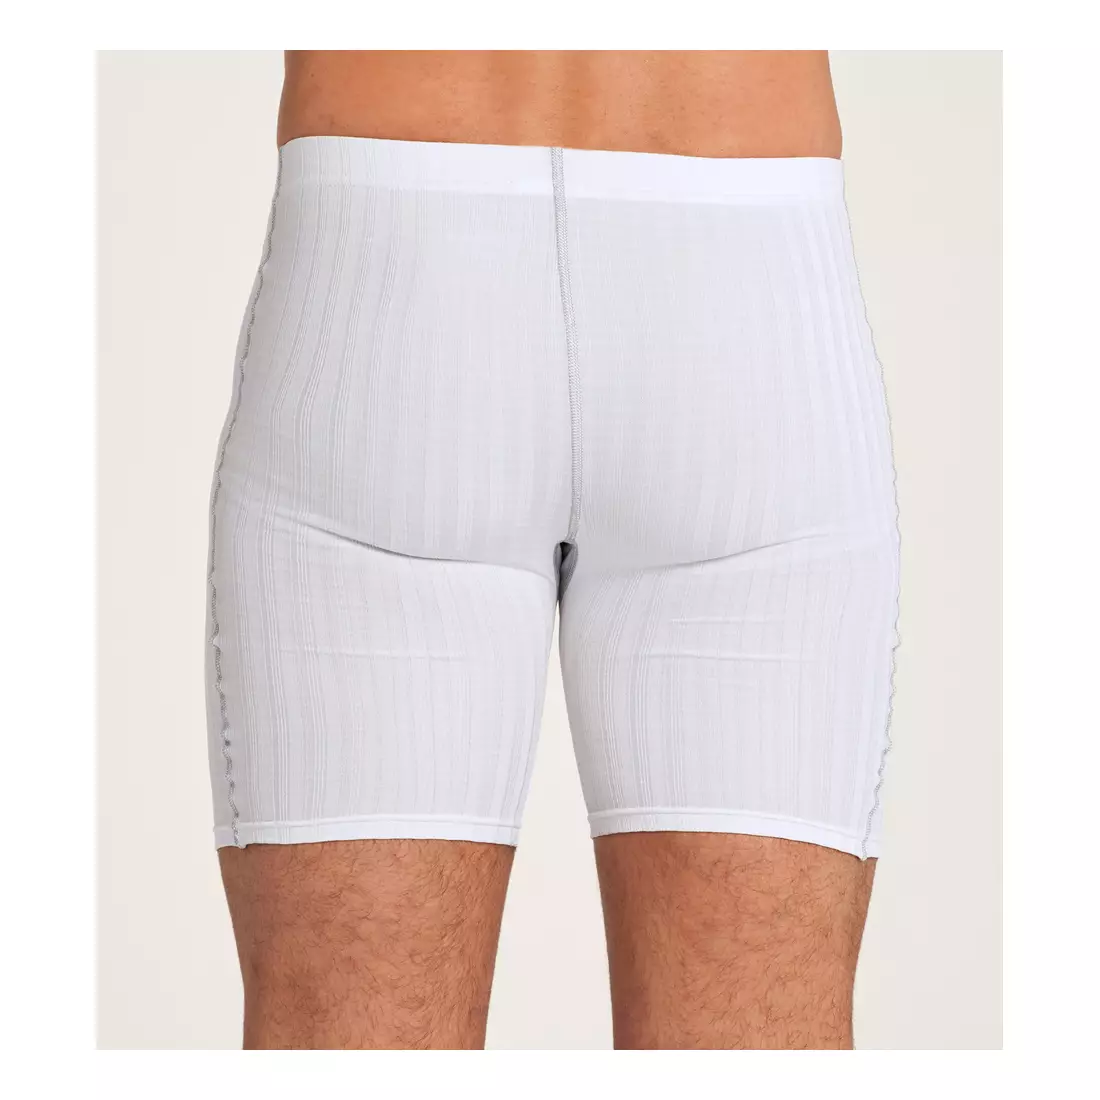 CRAFT ZERO EXTREME WINDSTOPPER 1900255-3900 - thermal underwear - men's boxer shorts